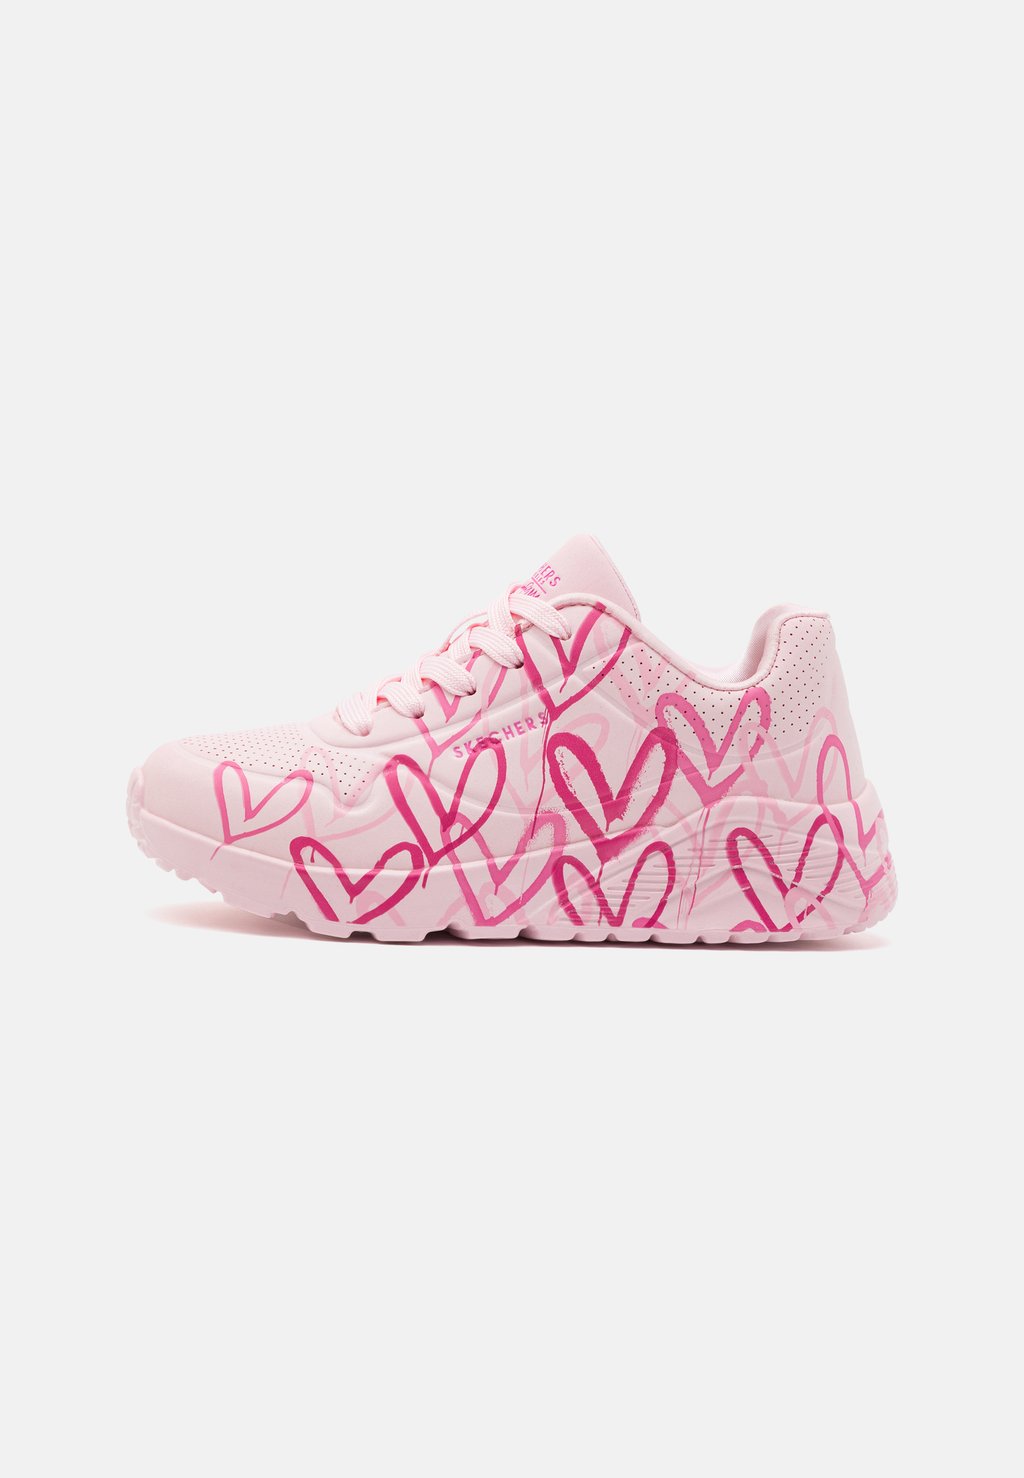 Низкие кроссовки Uno Lite Skechers, цвет light pink/multi pinks низкие кроссовки uno lite skechers цвет black multi coloured